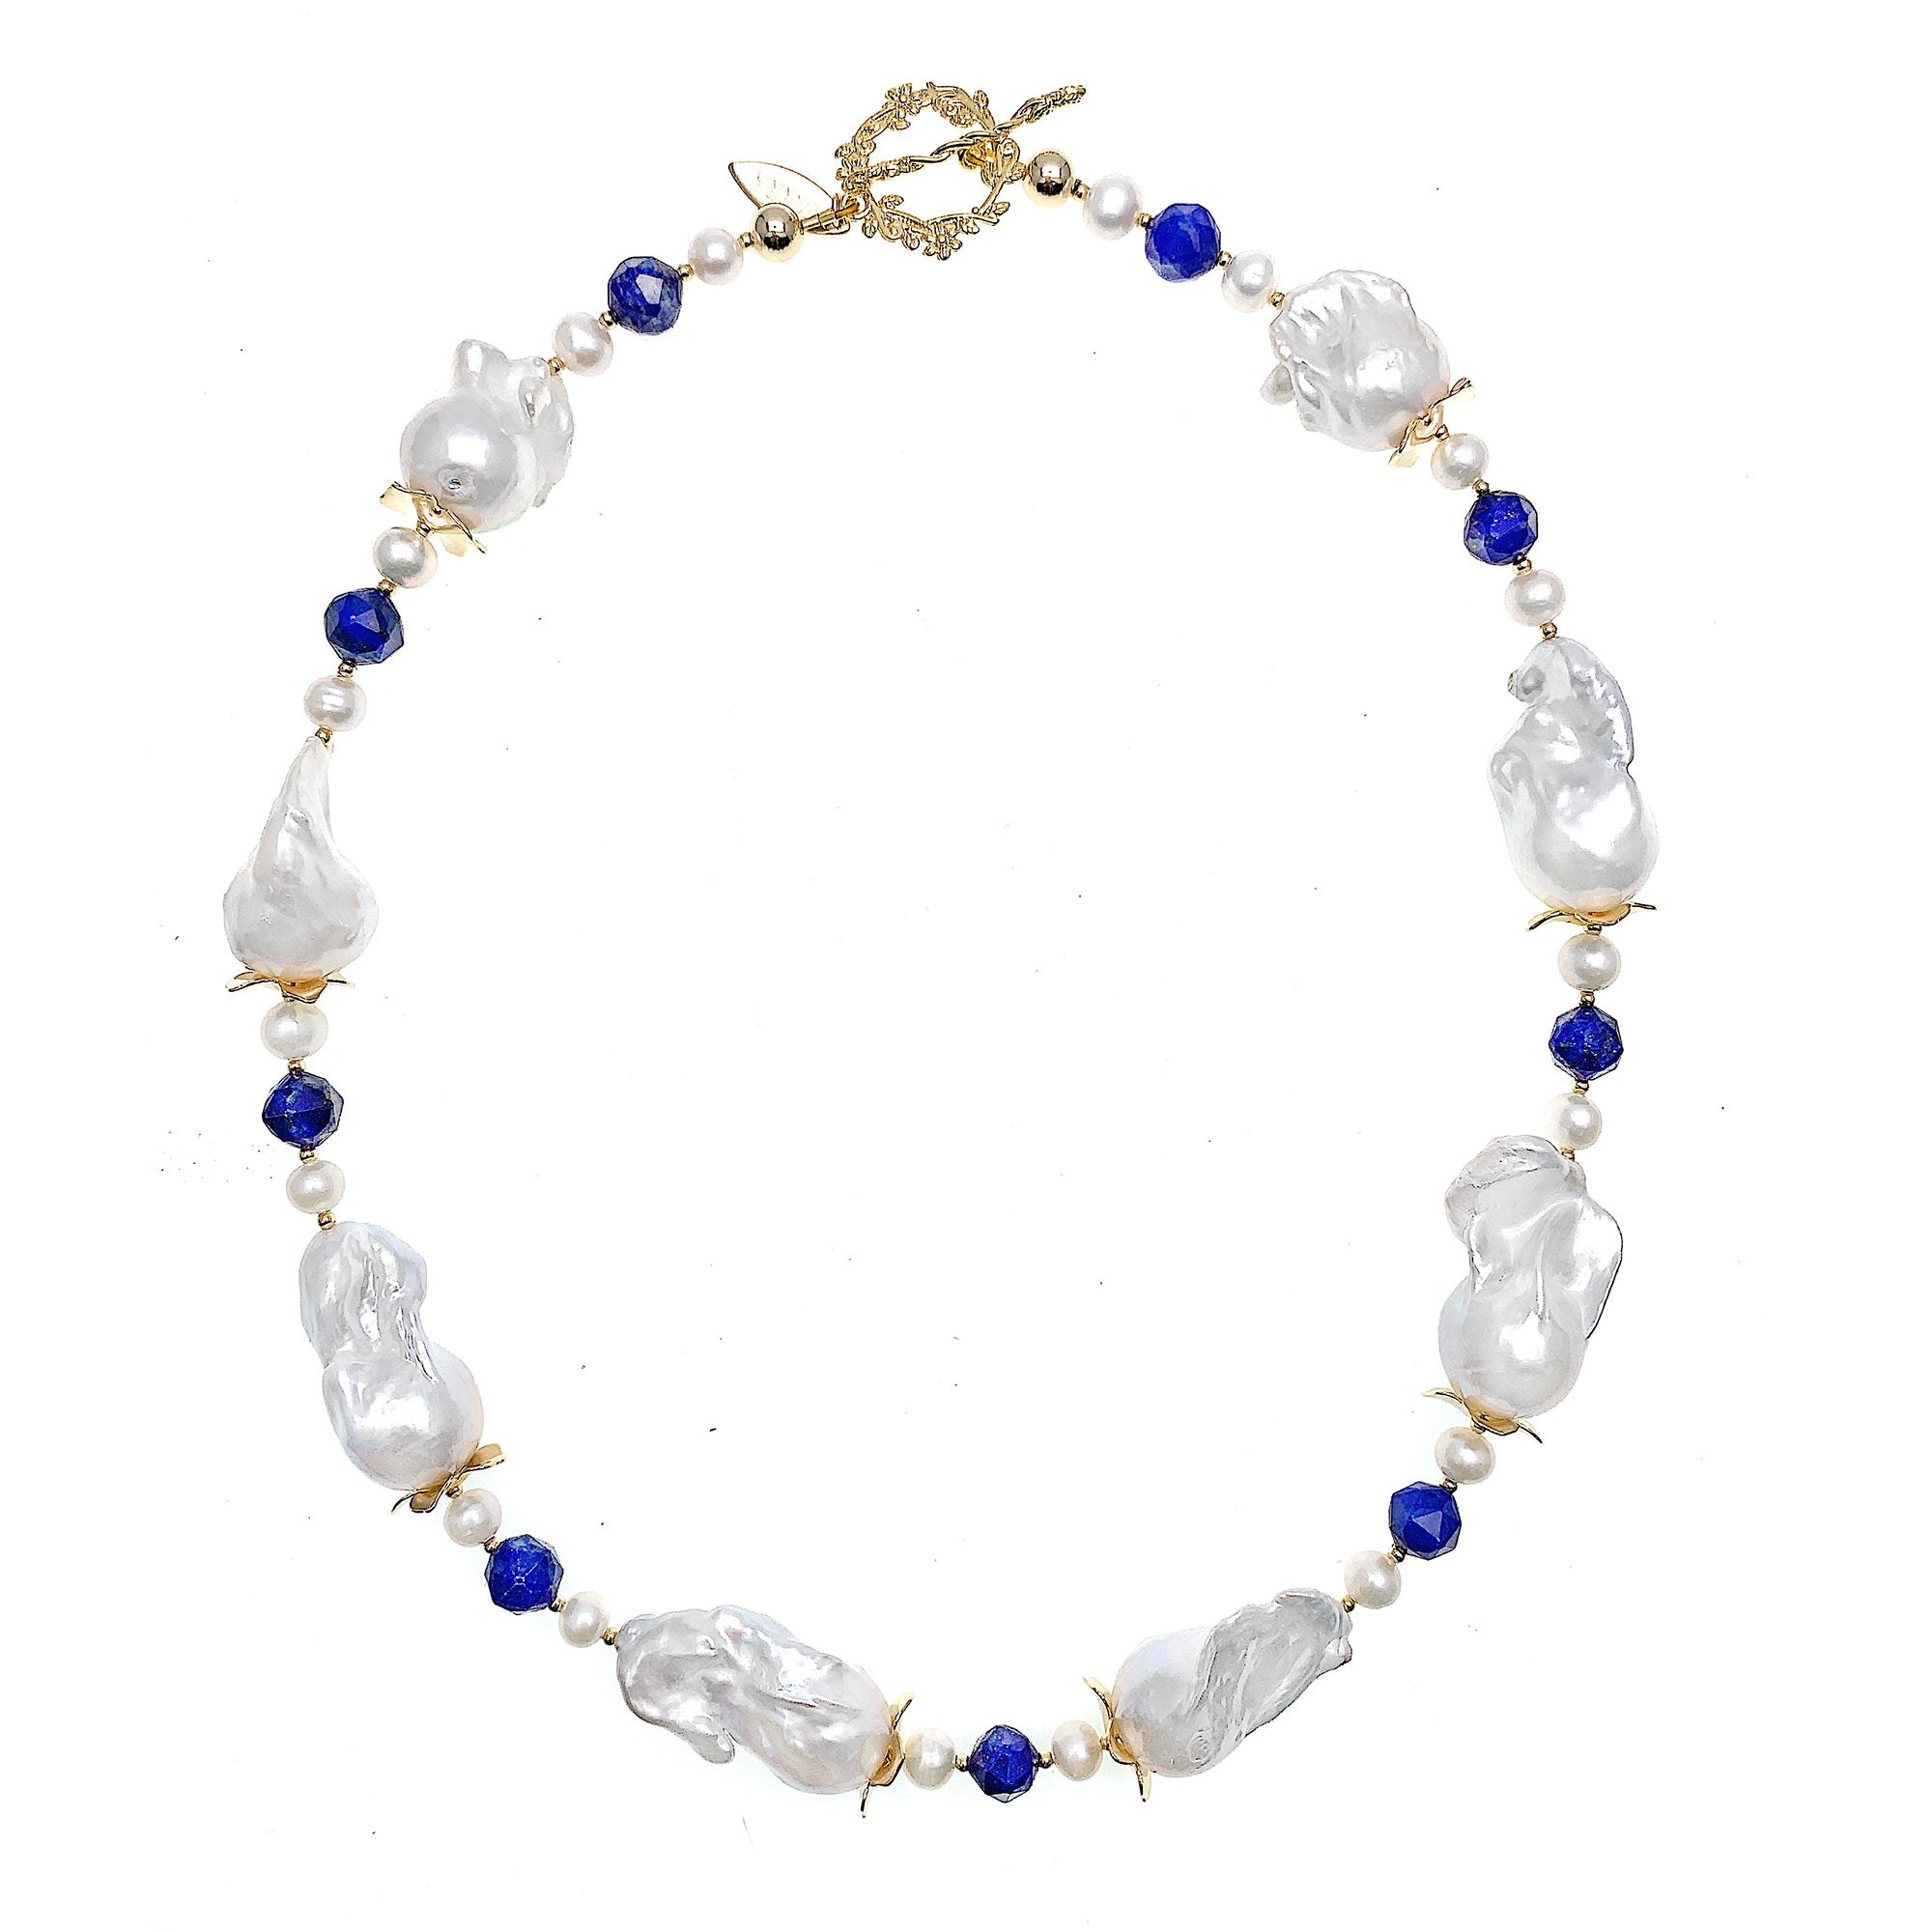 Farra Baroque Pearl and Lapis Lazuli Necklace,Farra Jewelry - Shopidpearl